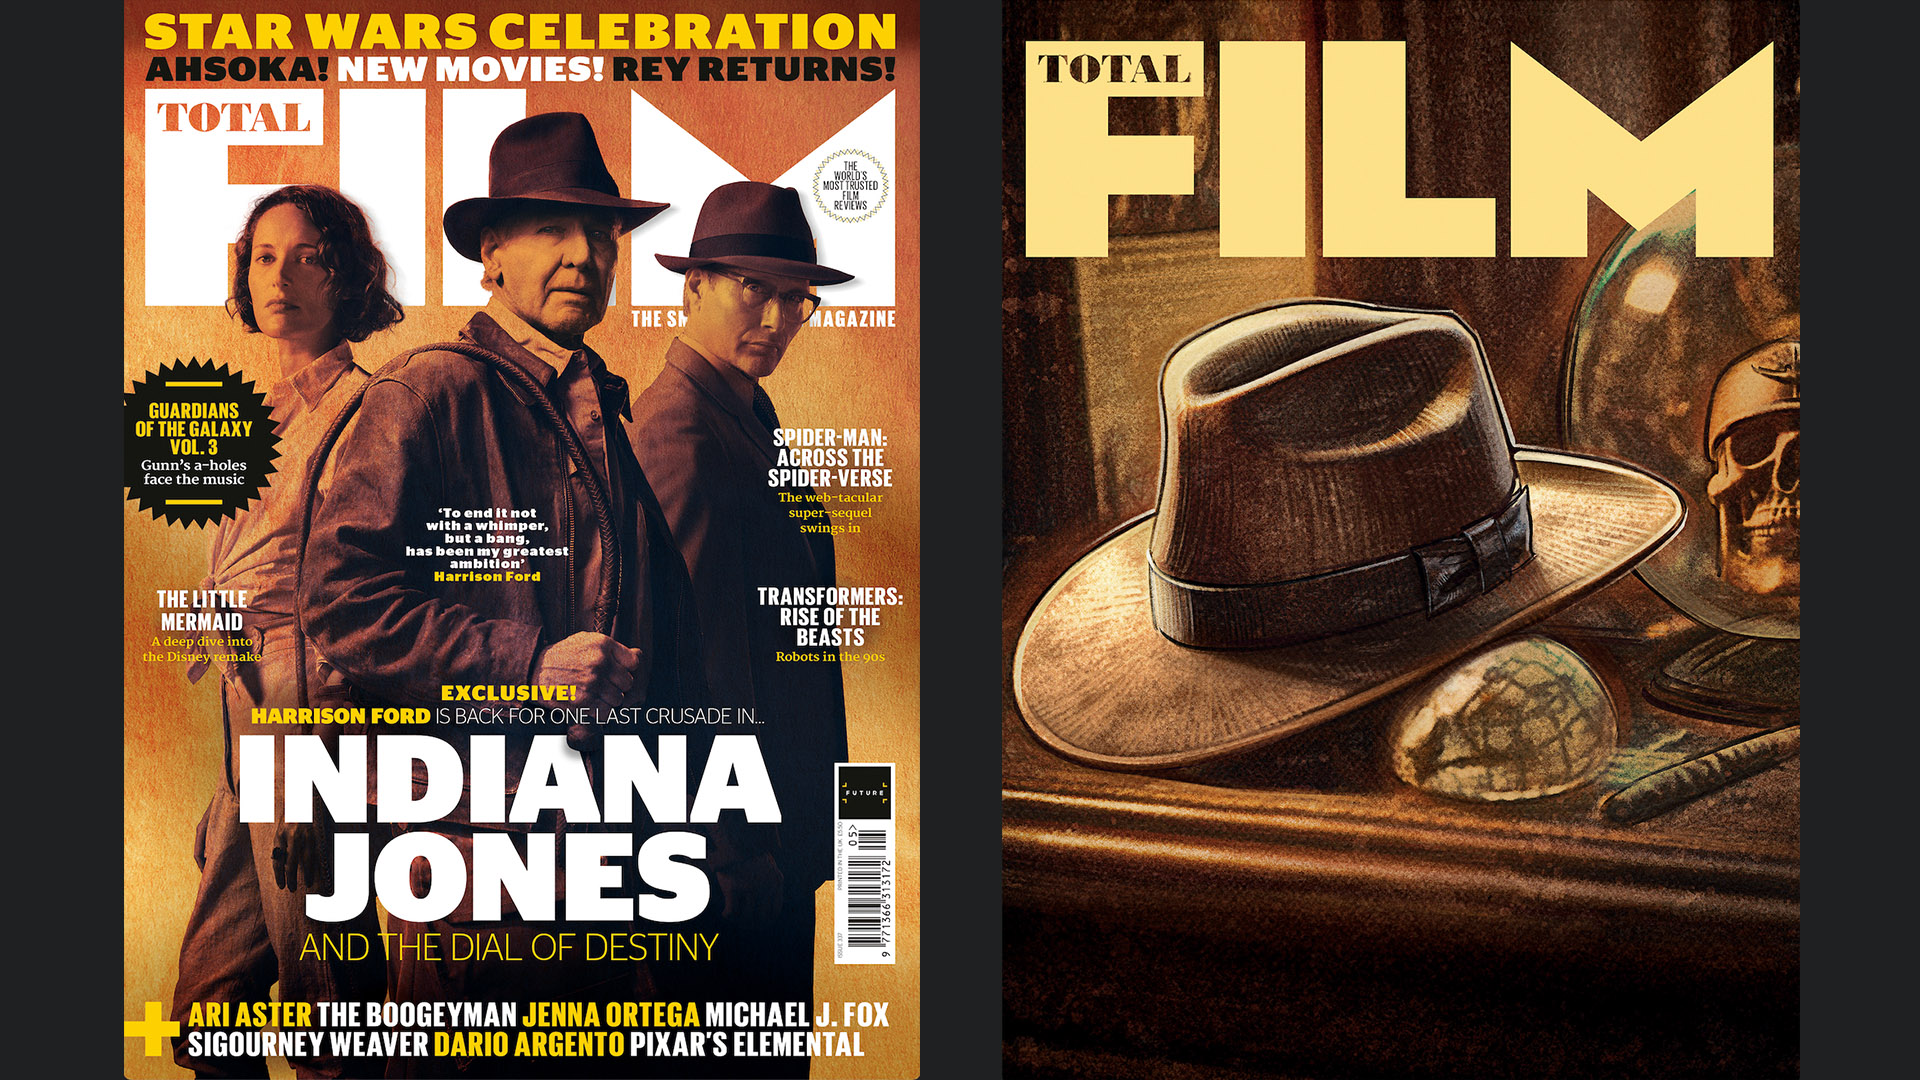 Indiana Jones Total Film Covers